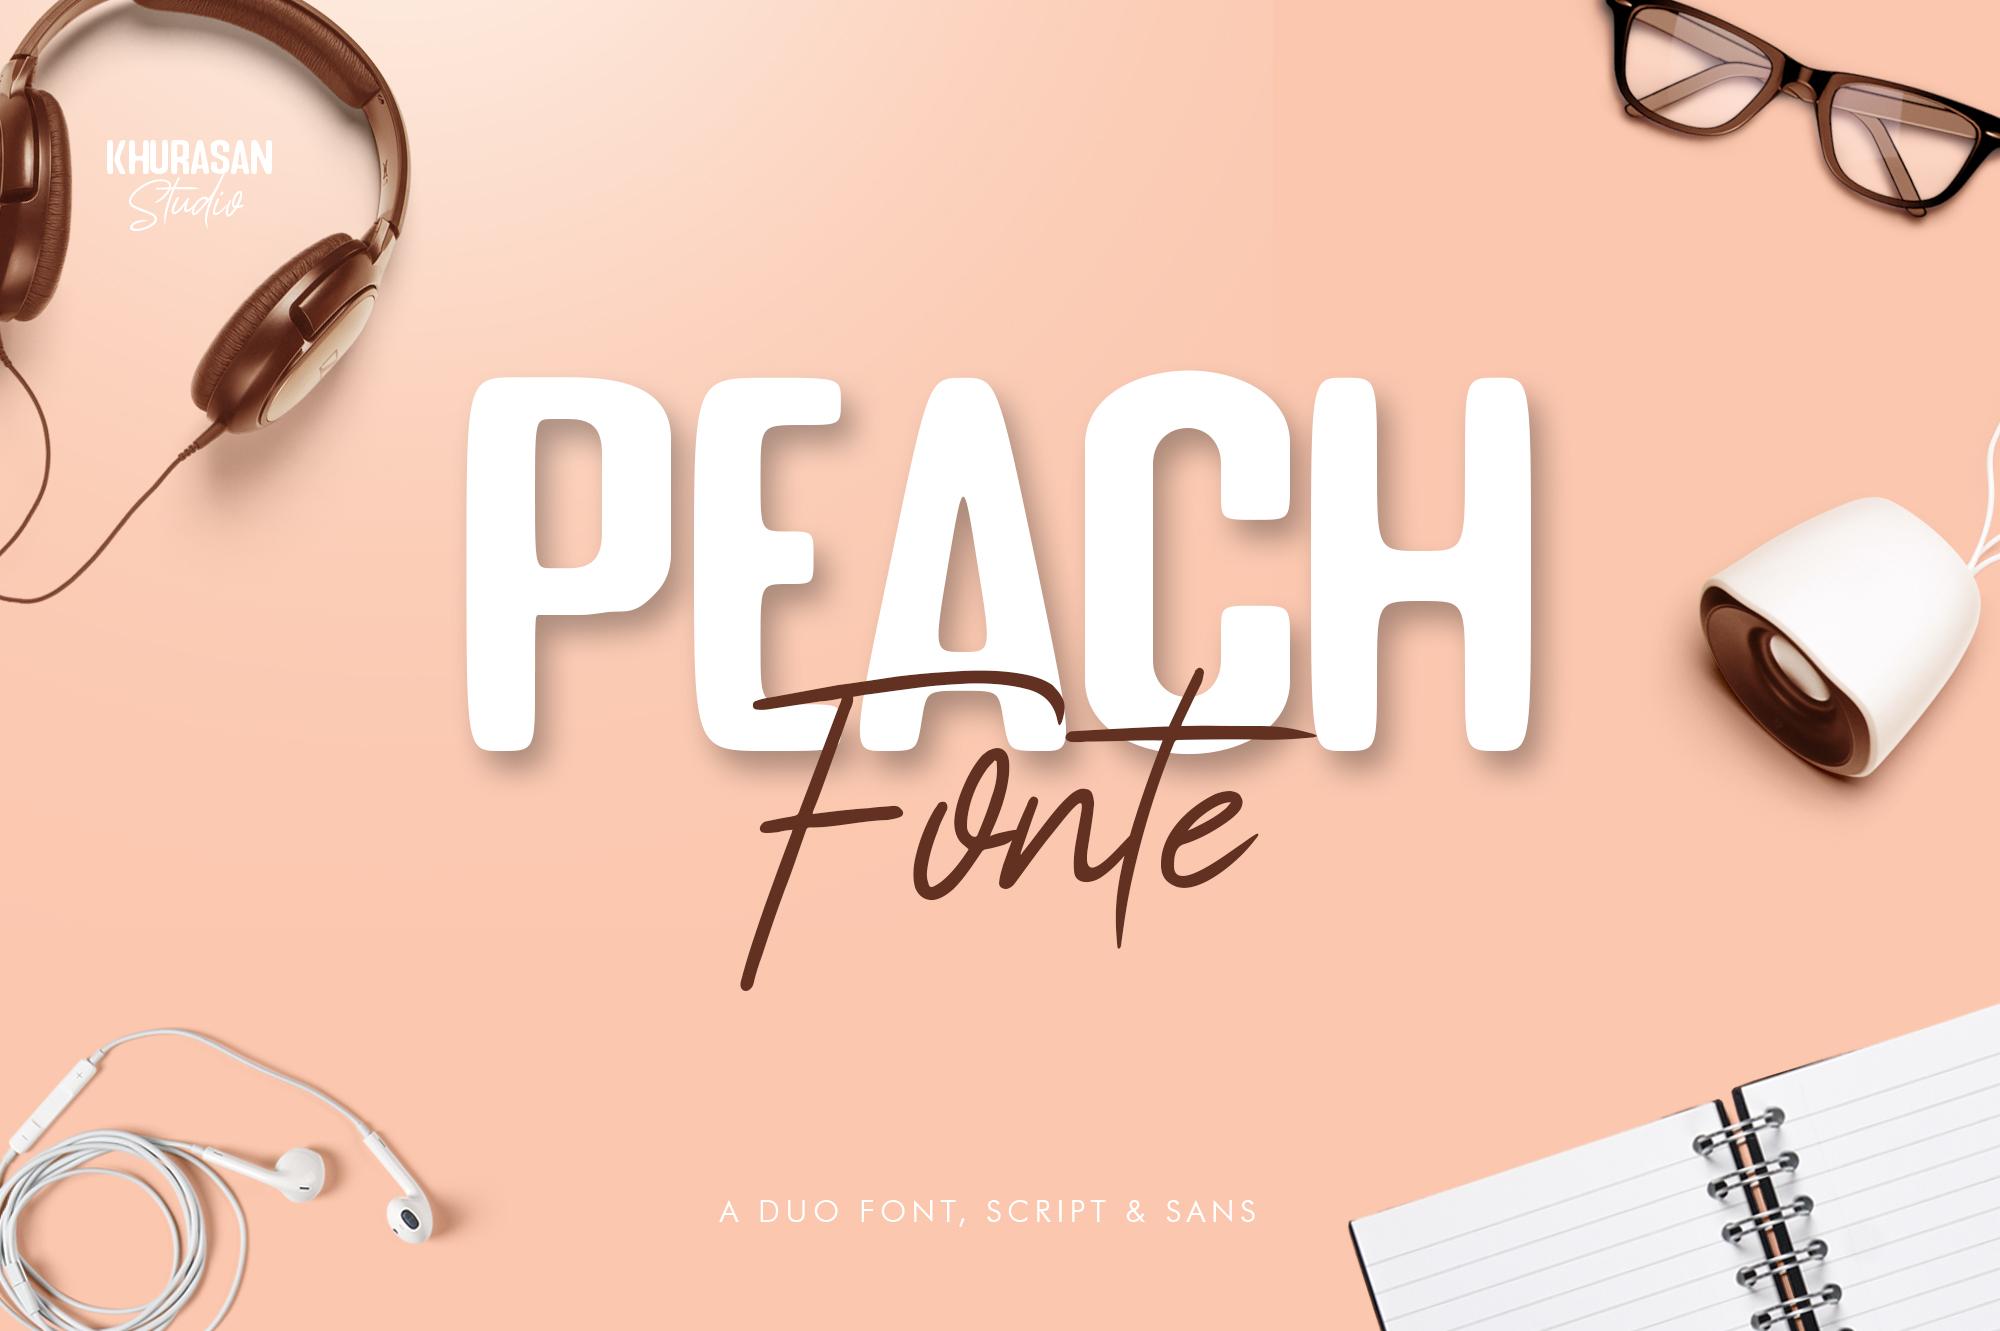 Peach Fonte Font